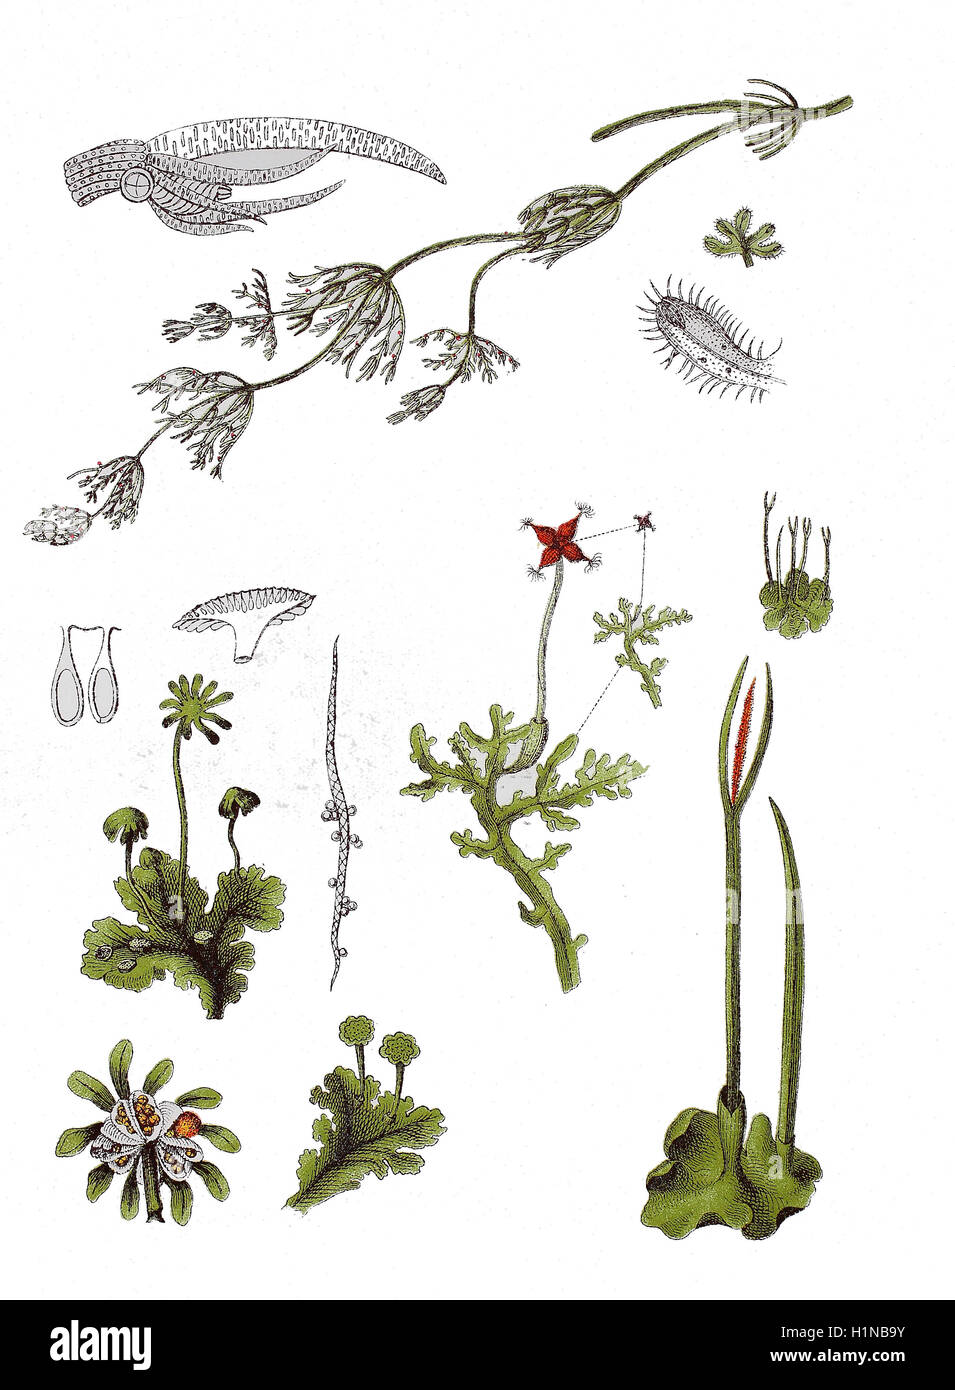 common stonewort, Chara vulgaris (top), common liverwort or umbrella liverwort, Marchantia polymorpha (left bottem), Aneura pinguis (center), smooth hornwort, Phaeoceros laevis (right bottem) Stock Photo